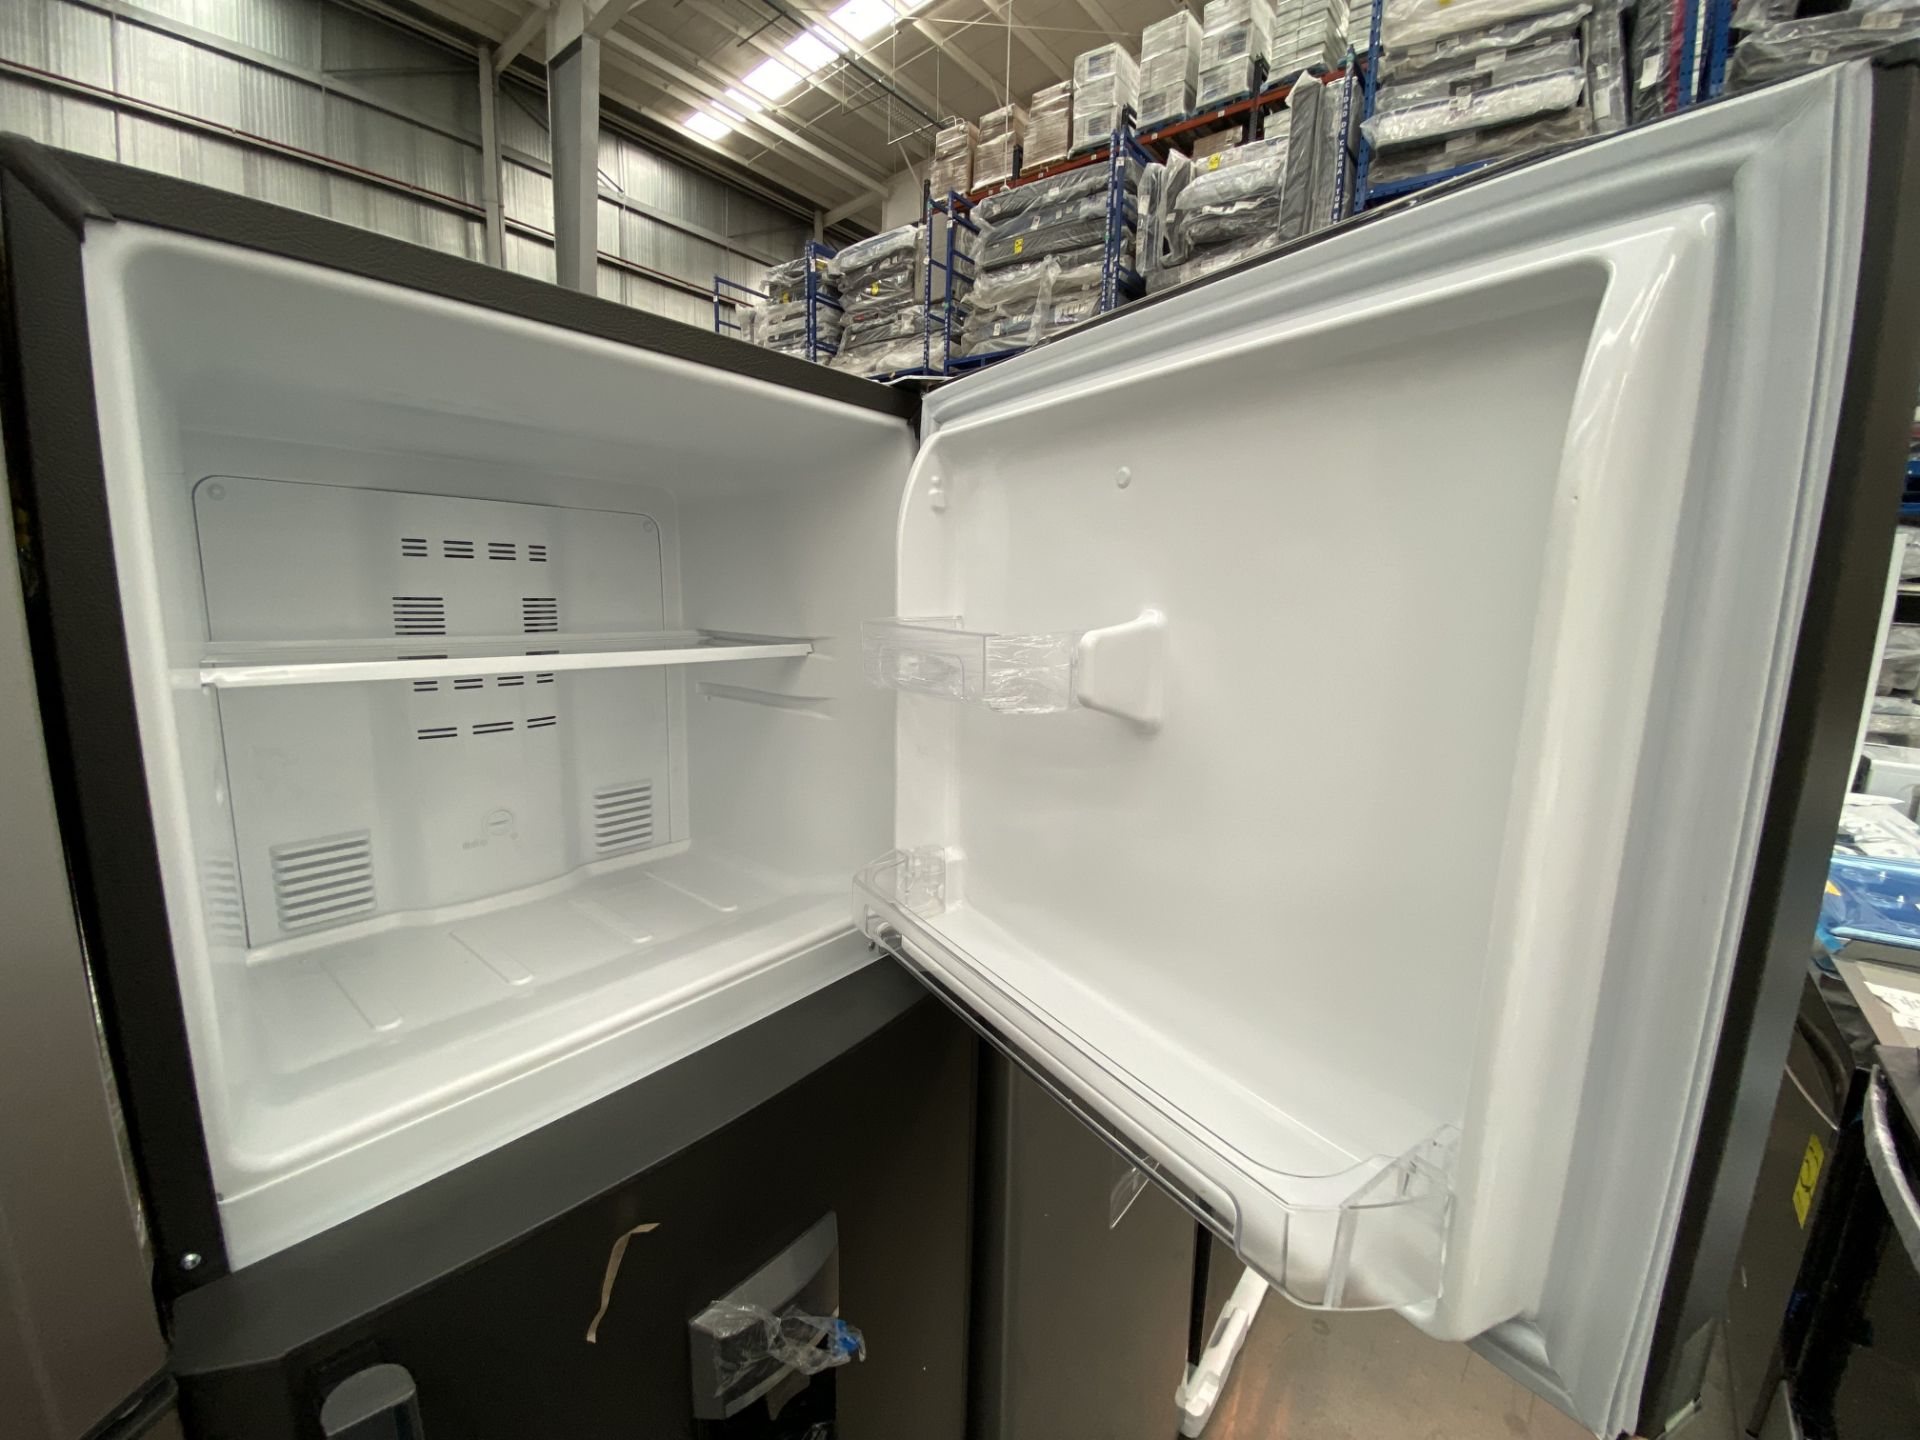 Lote de 1 Refrigerador con dispensador de Agua, Marca Mabe, Modelo RMA300FJMR, Serie 2204B704727, C - Image 8 of 13